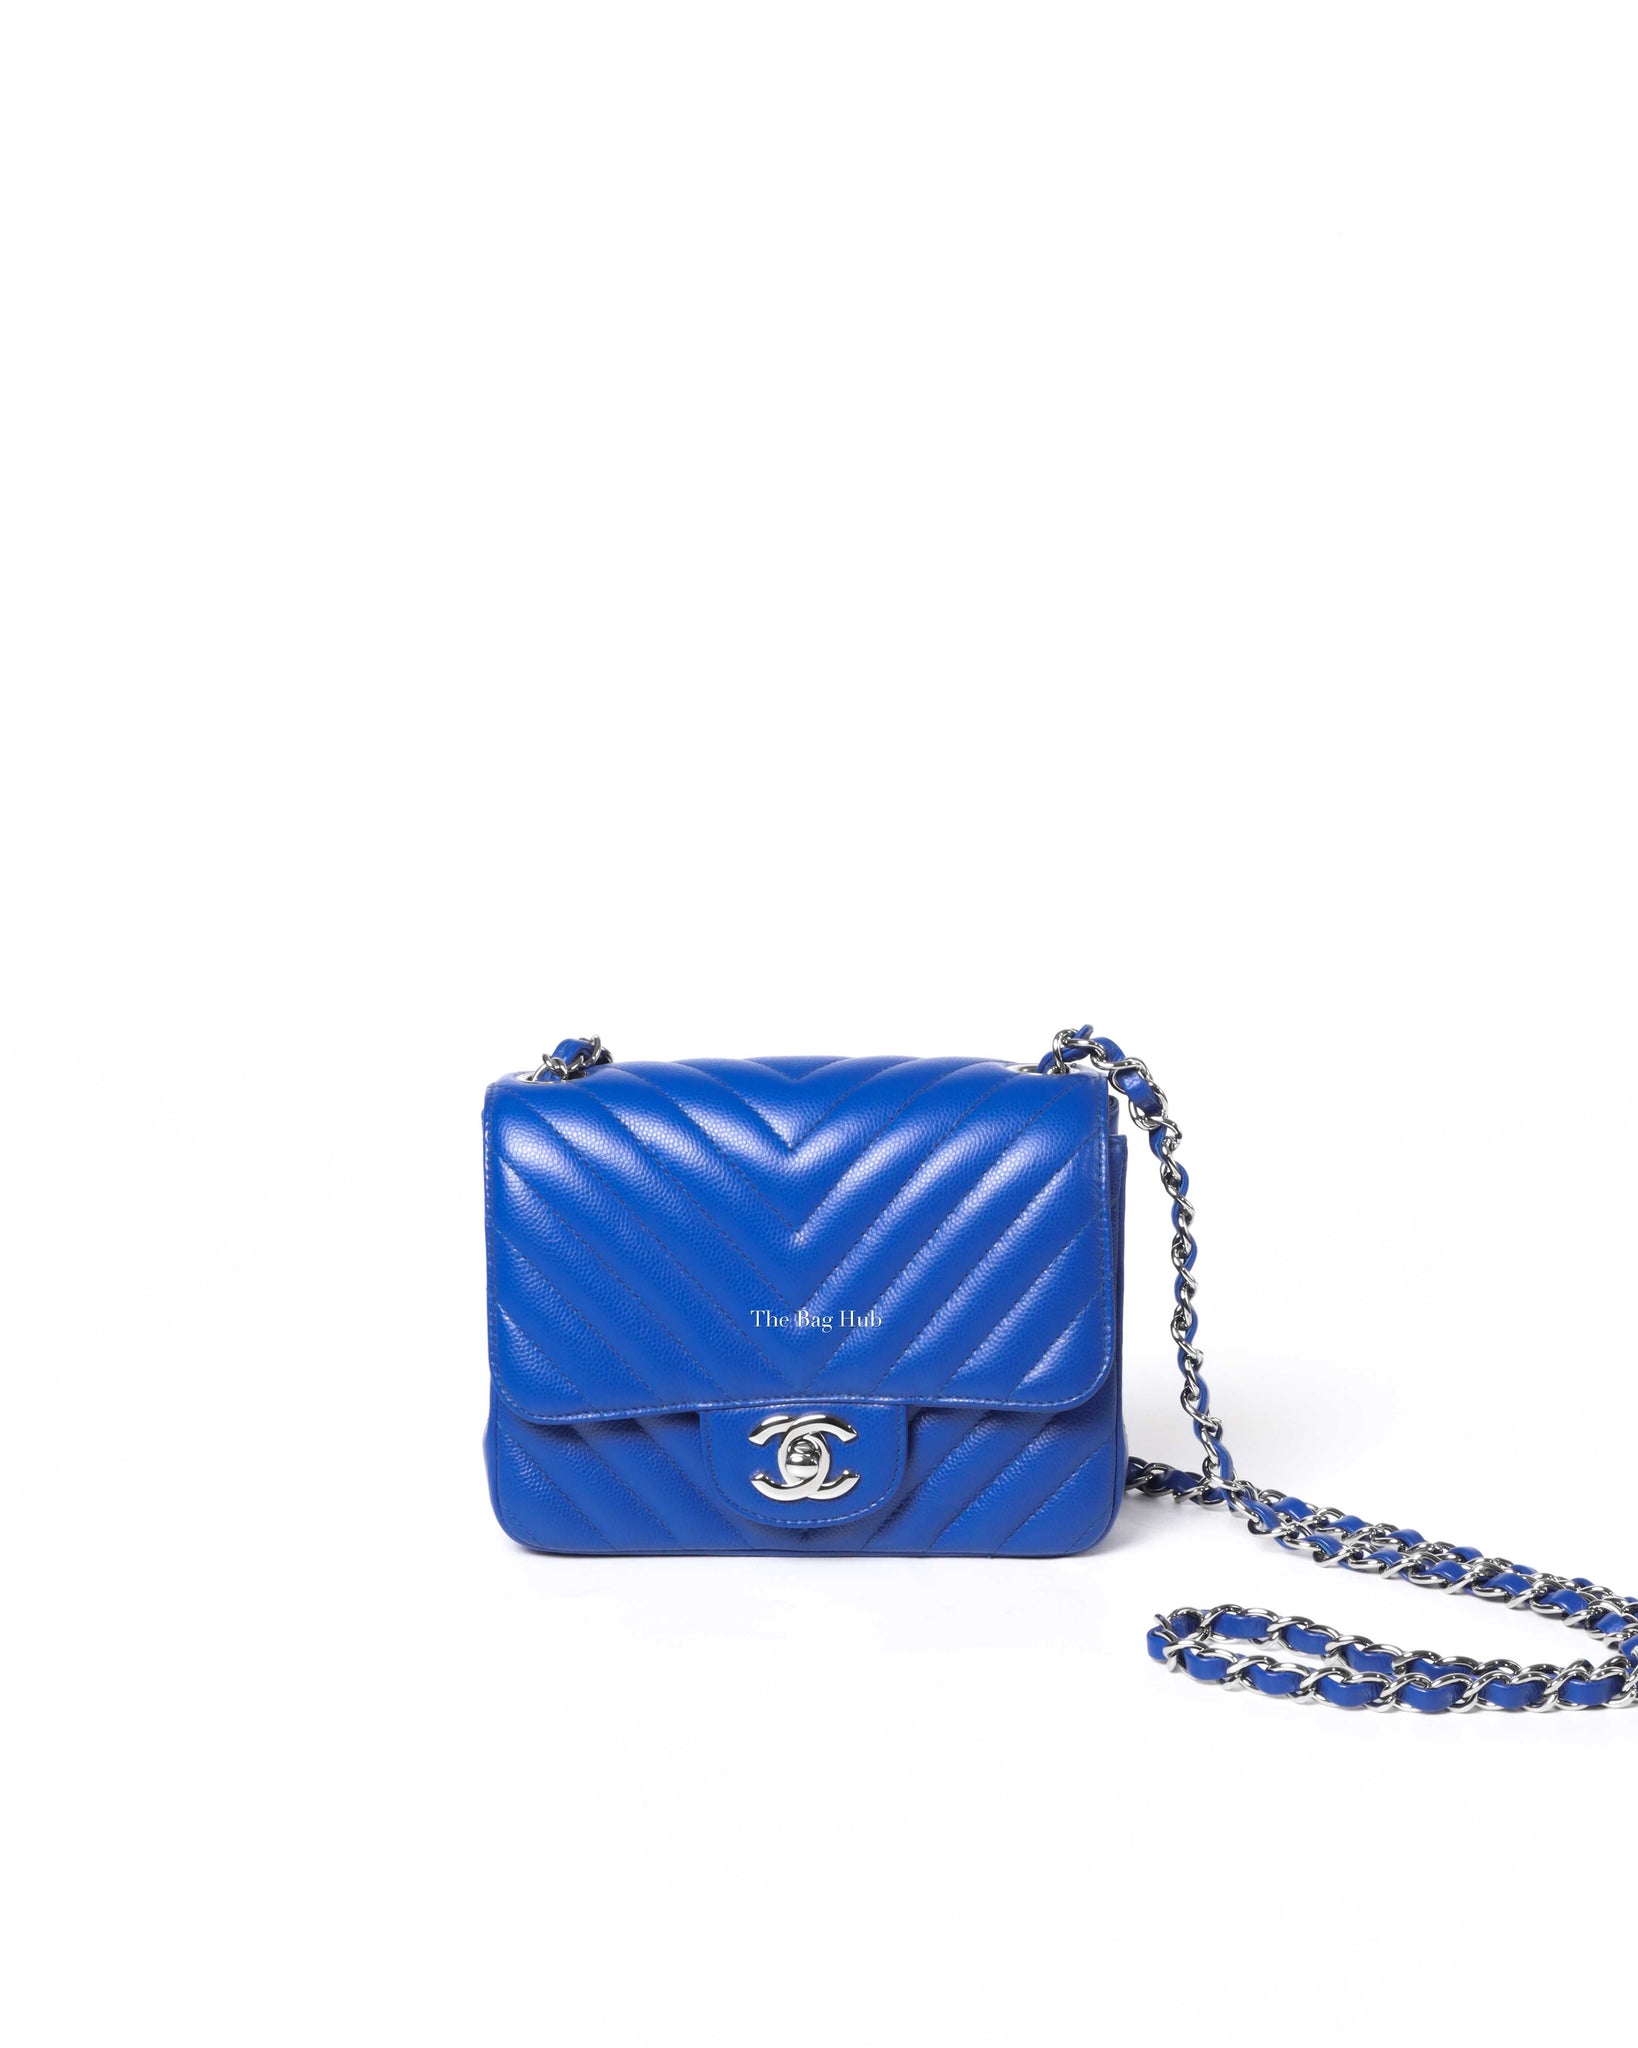 Chanel Royal Blue Caviar Chevron Mini Square Slingbag SHW, Designer Brand, Authentic Chanel